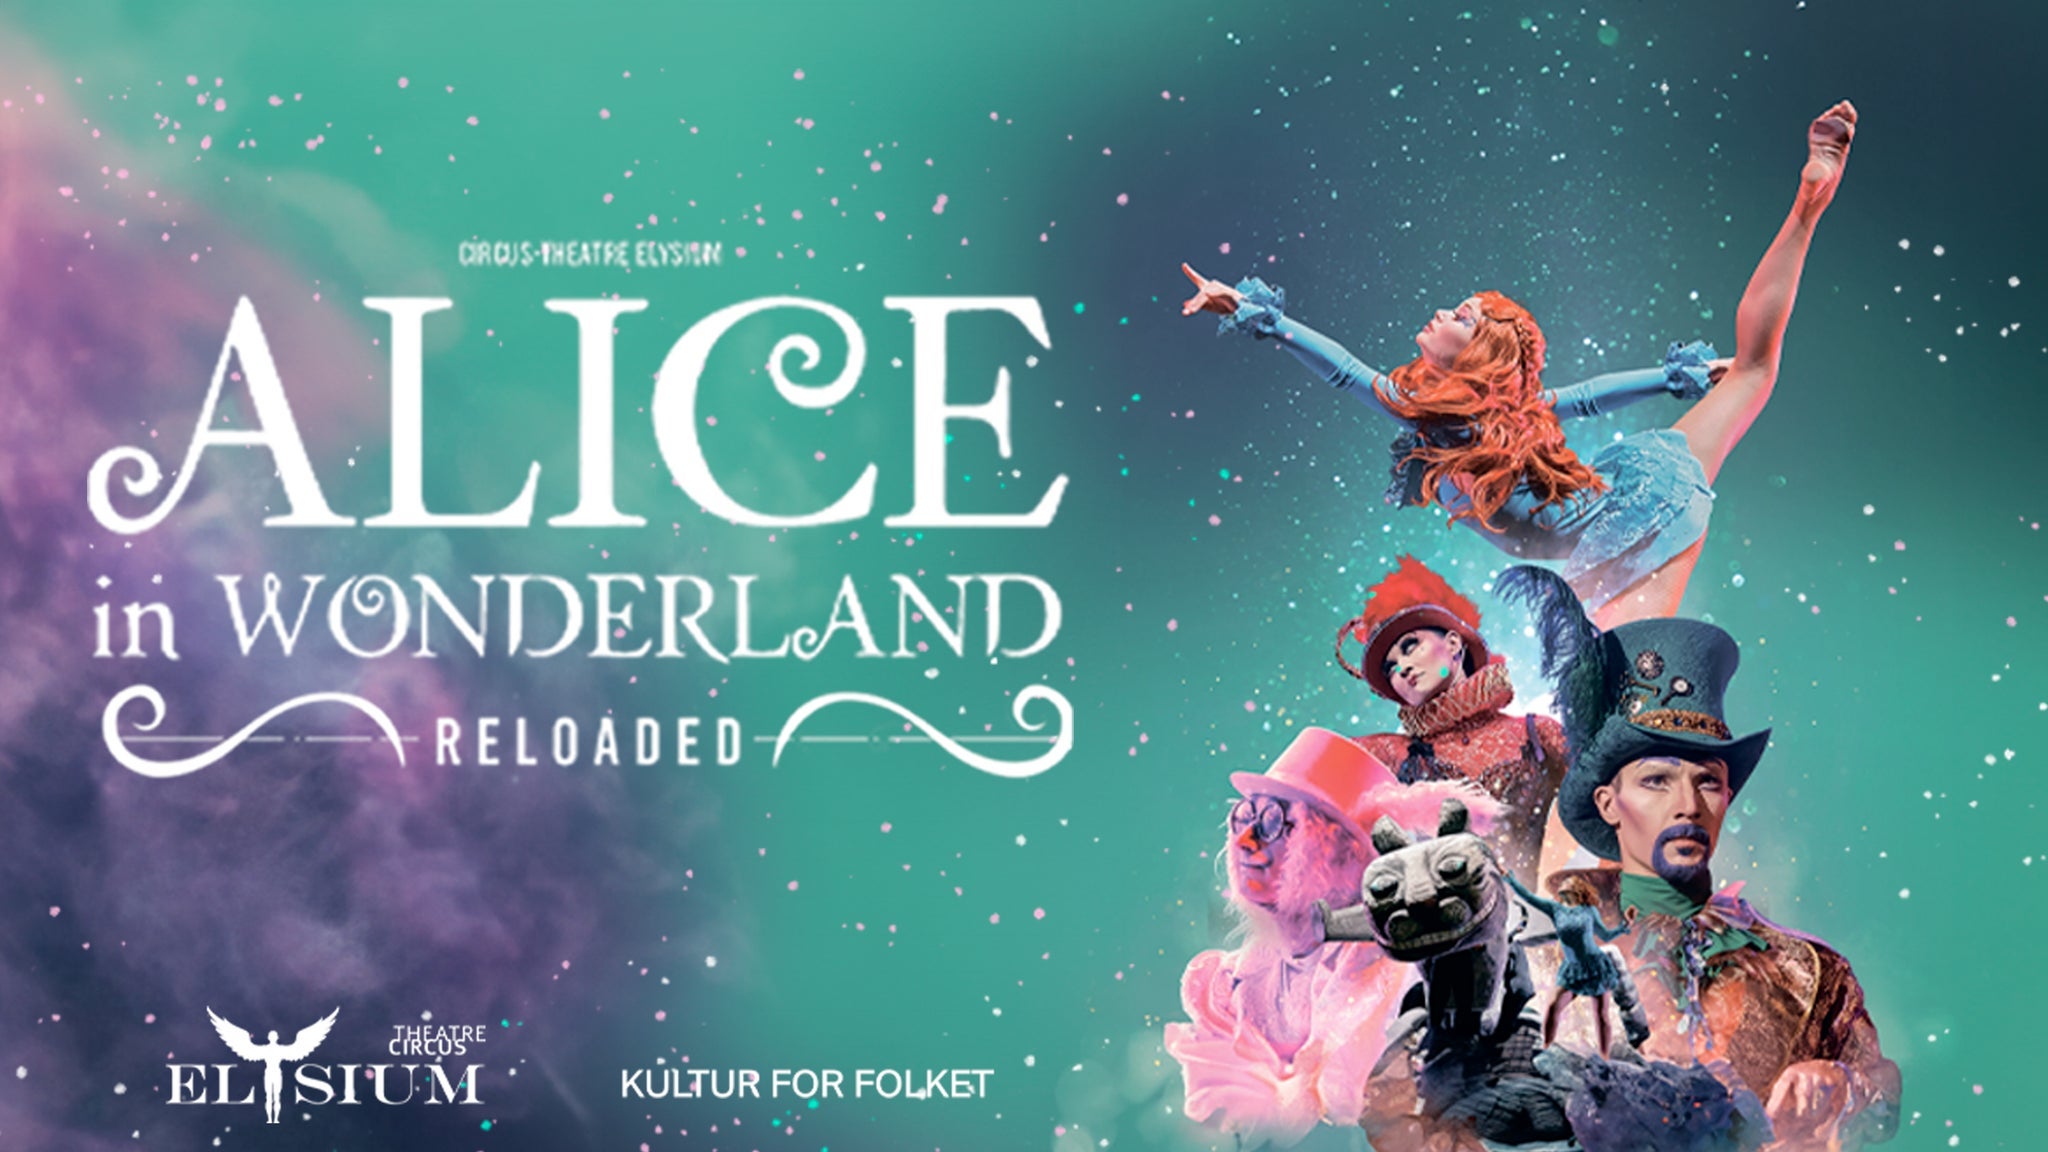 Inside the ultimate Alice in Wonderland retreat in Brighton